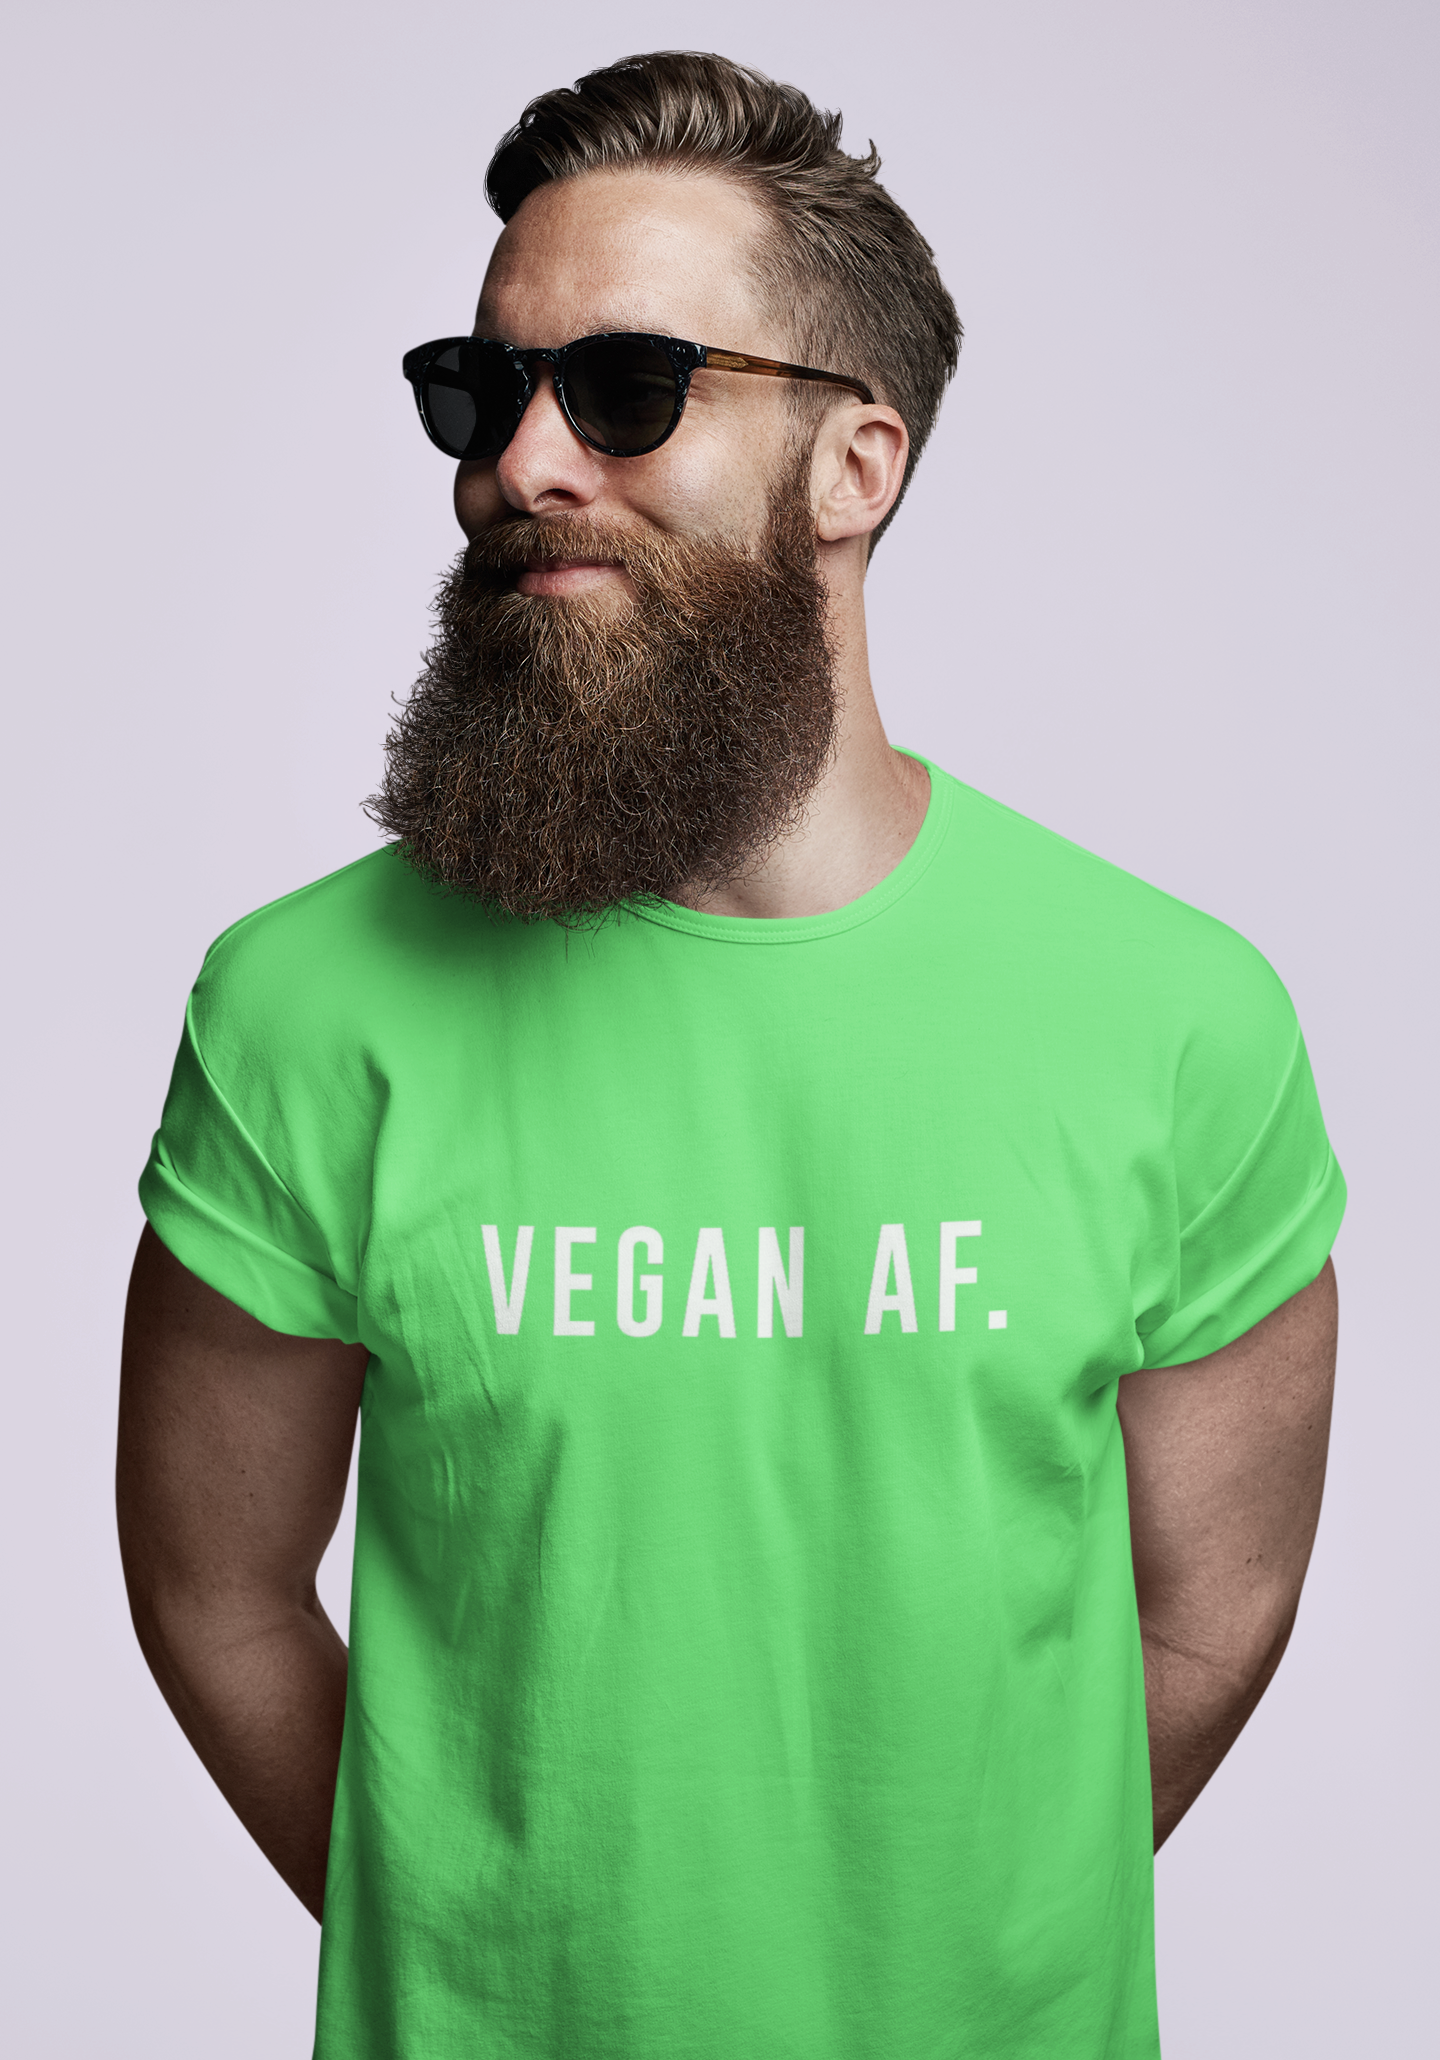 Vegan AF. Vegan T-shirt